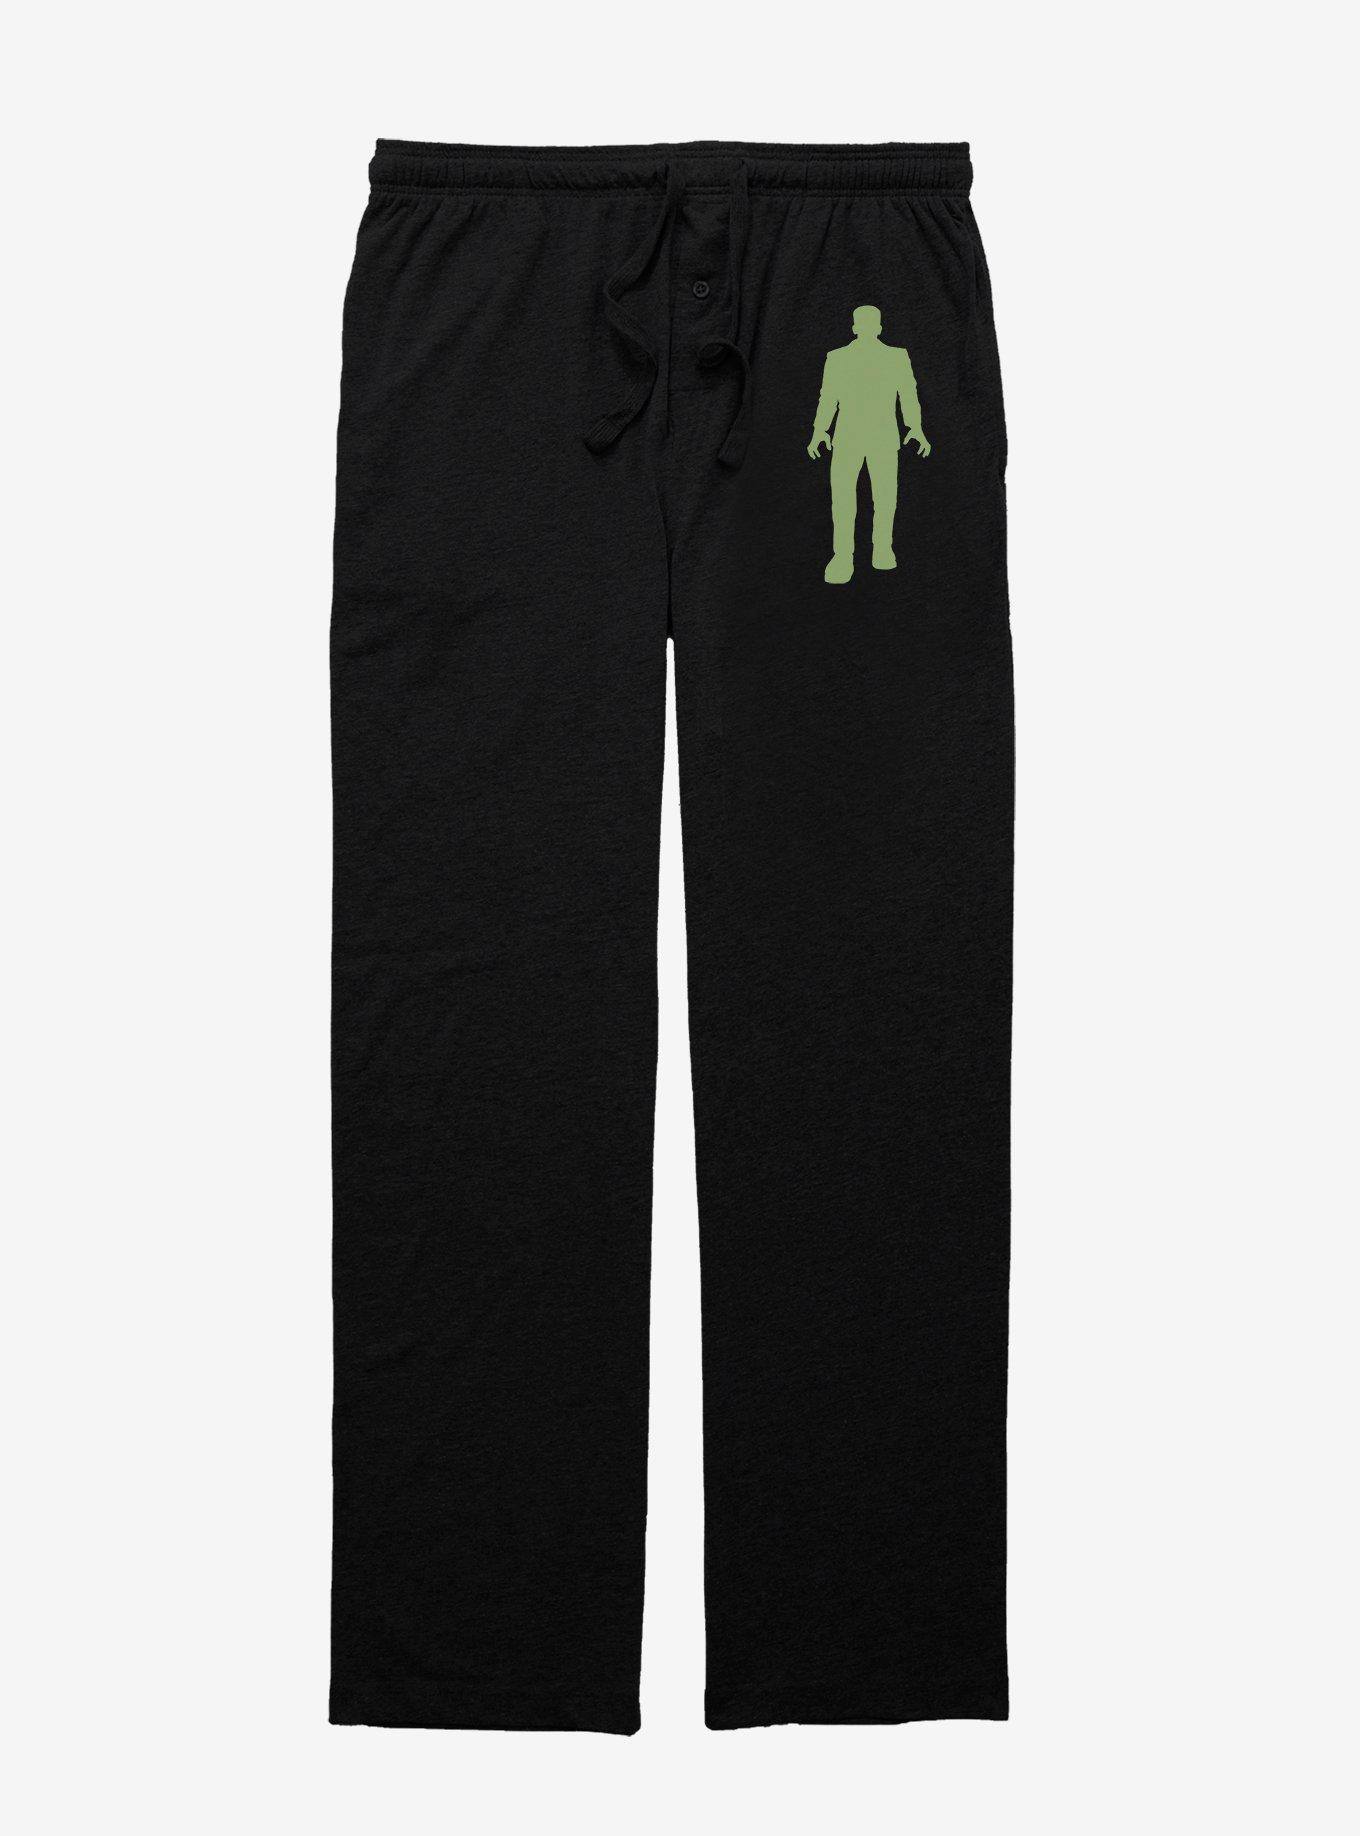 Frankenstein Silhouette Pajama Pants